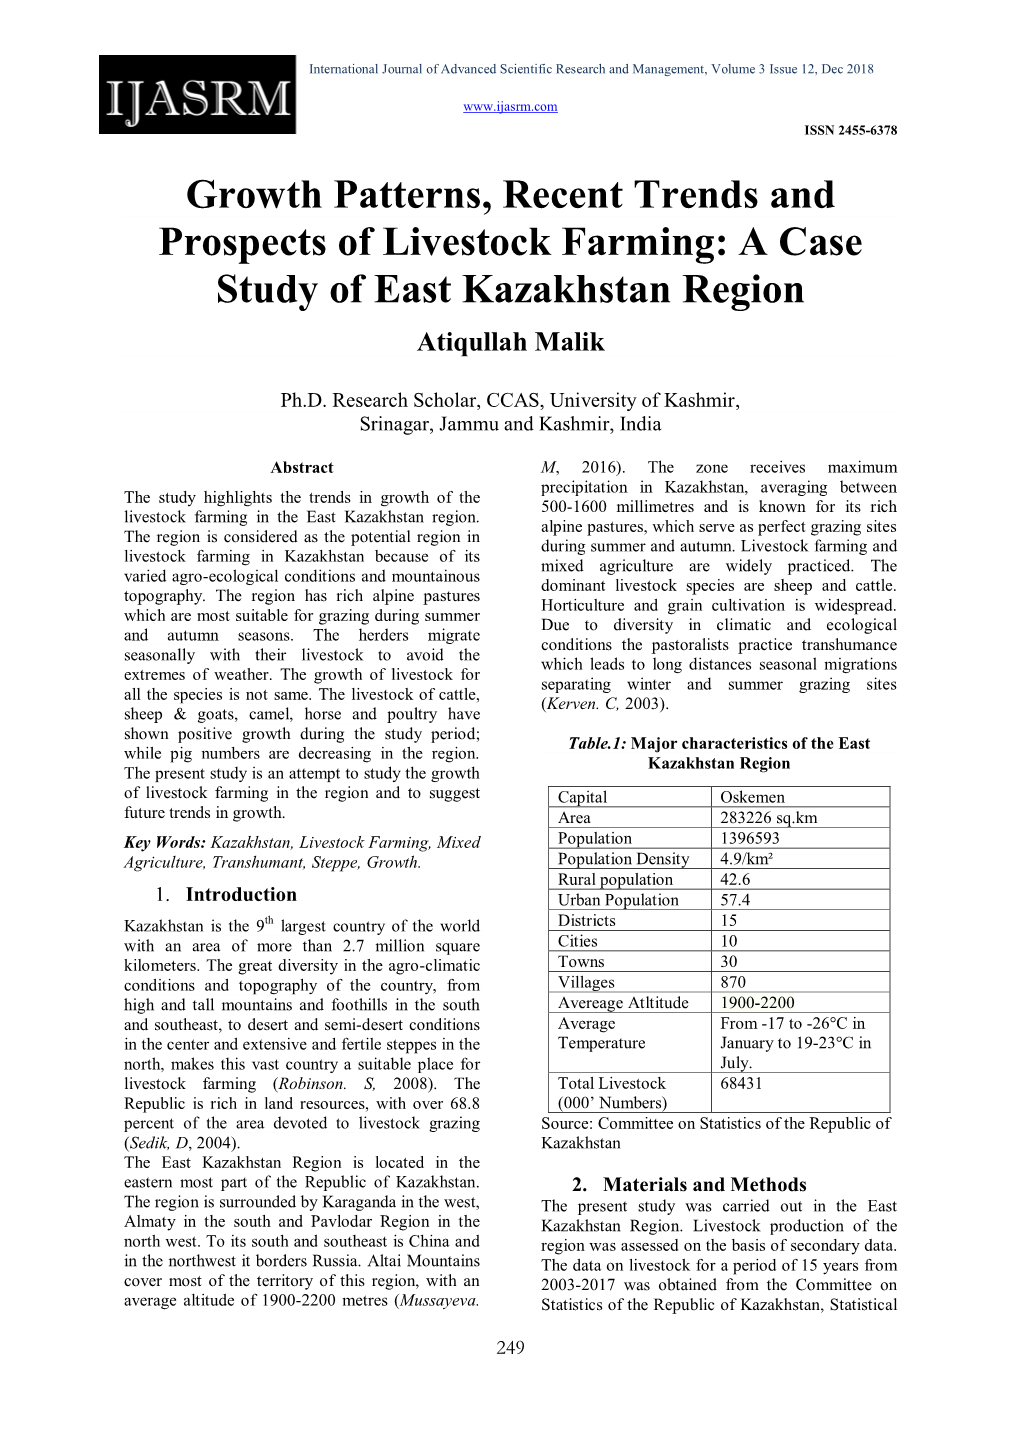 Growth Patterns, Recent Trends and Prospects of Livestock Farming: a Case Study of East Kazakhstan Region Atiqullah Malik